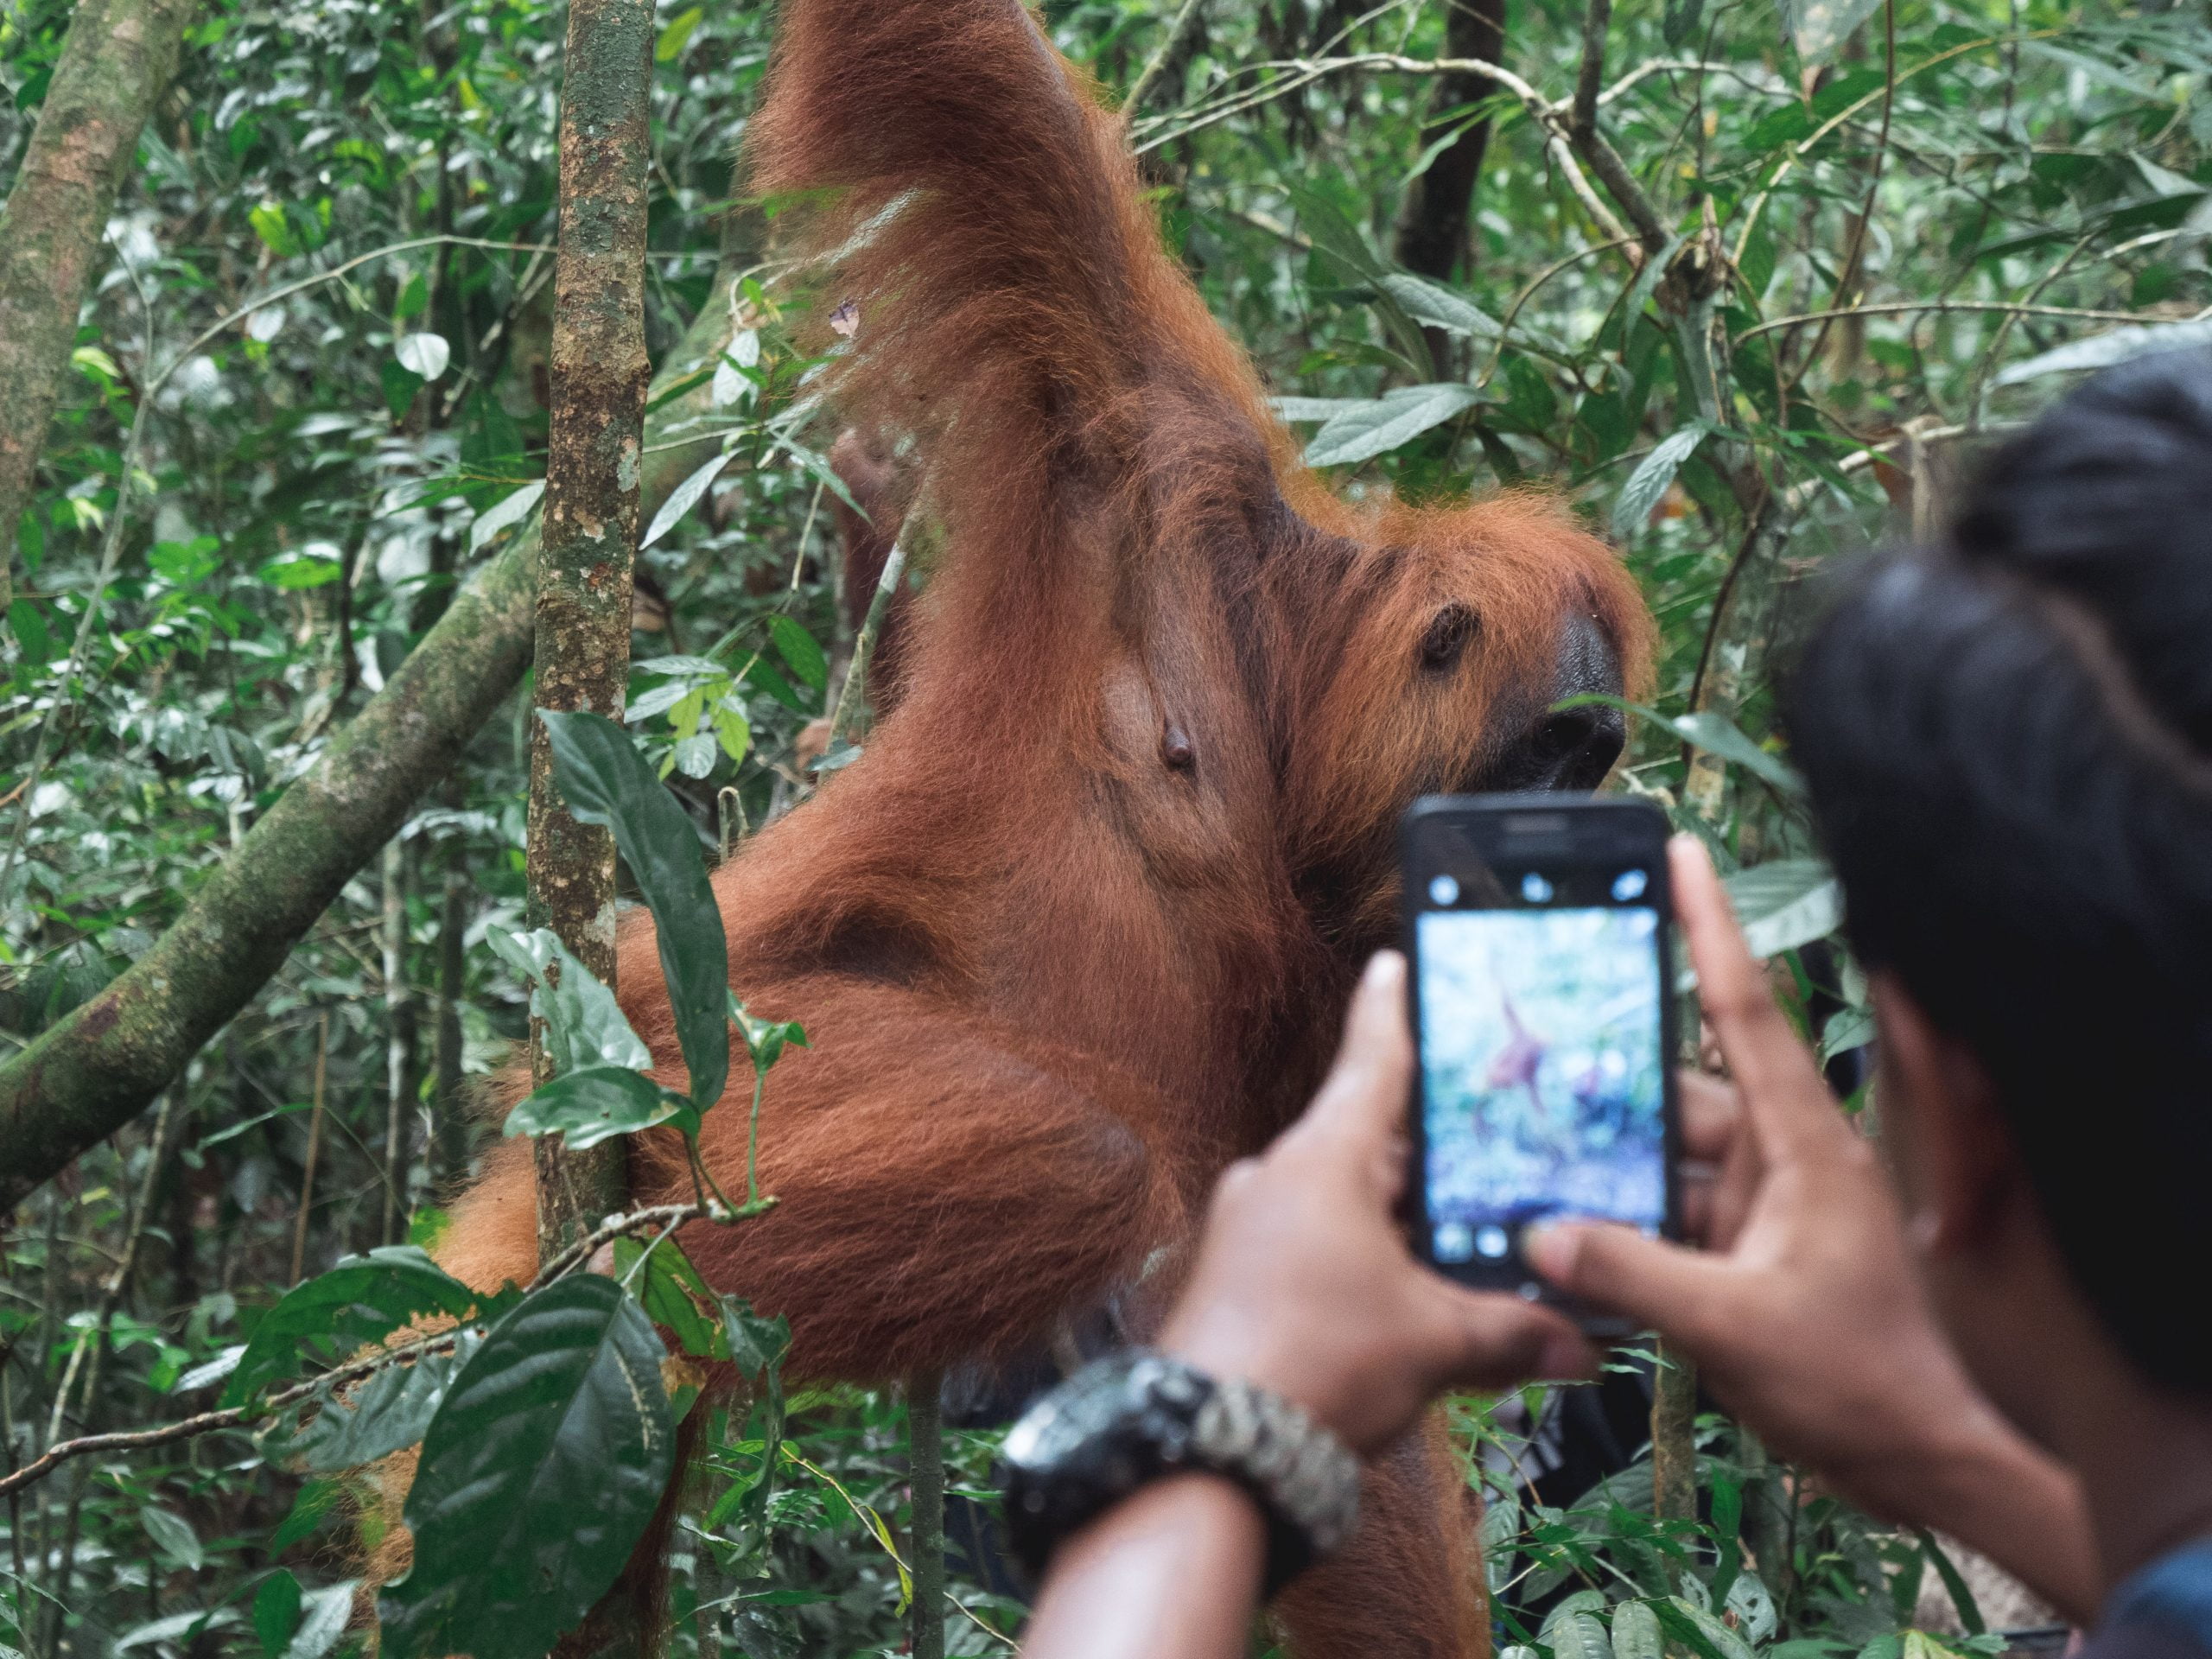 bukit lawang orang outan selfie scaled - Les globe blogueurs - blog voyage nature